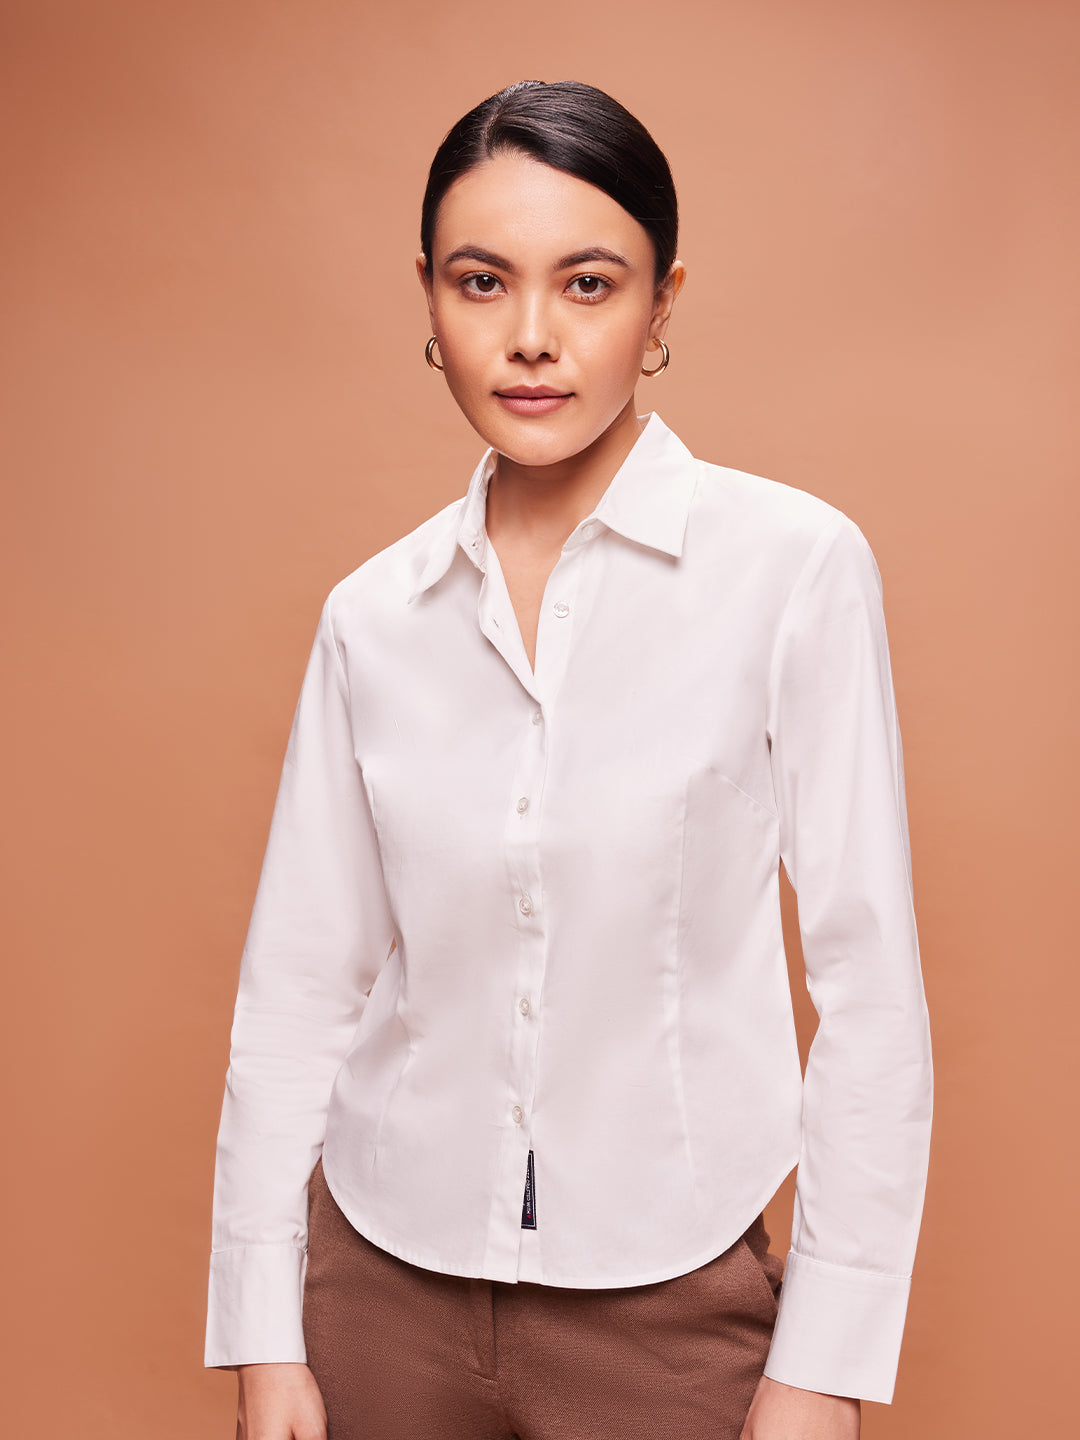 Bombay High Women's Bright White Solid Premium Cotton Slim Fit Shirt